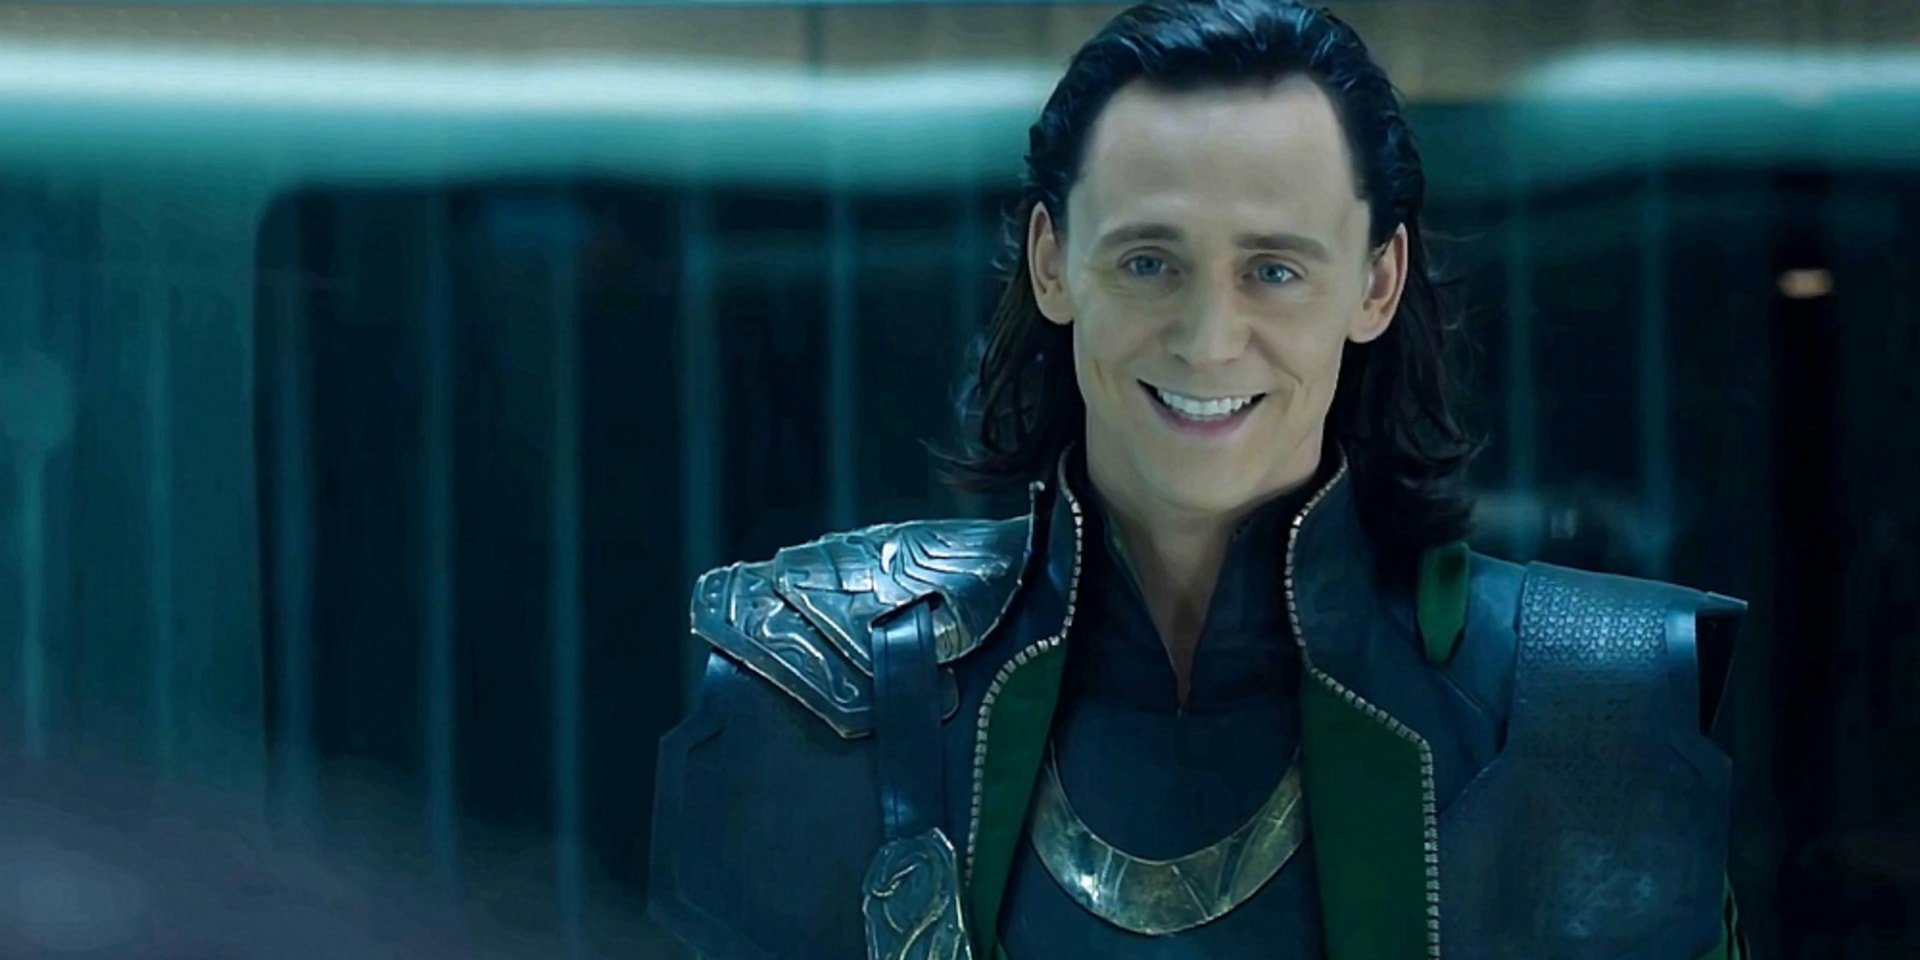 Loki (Avengers)